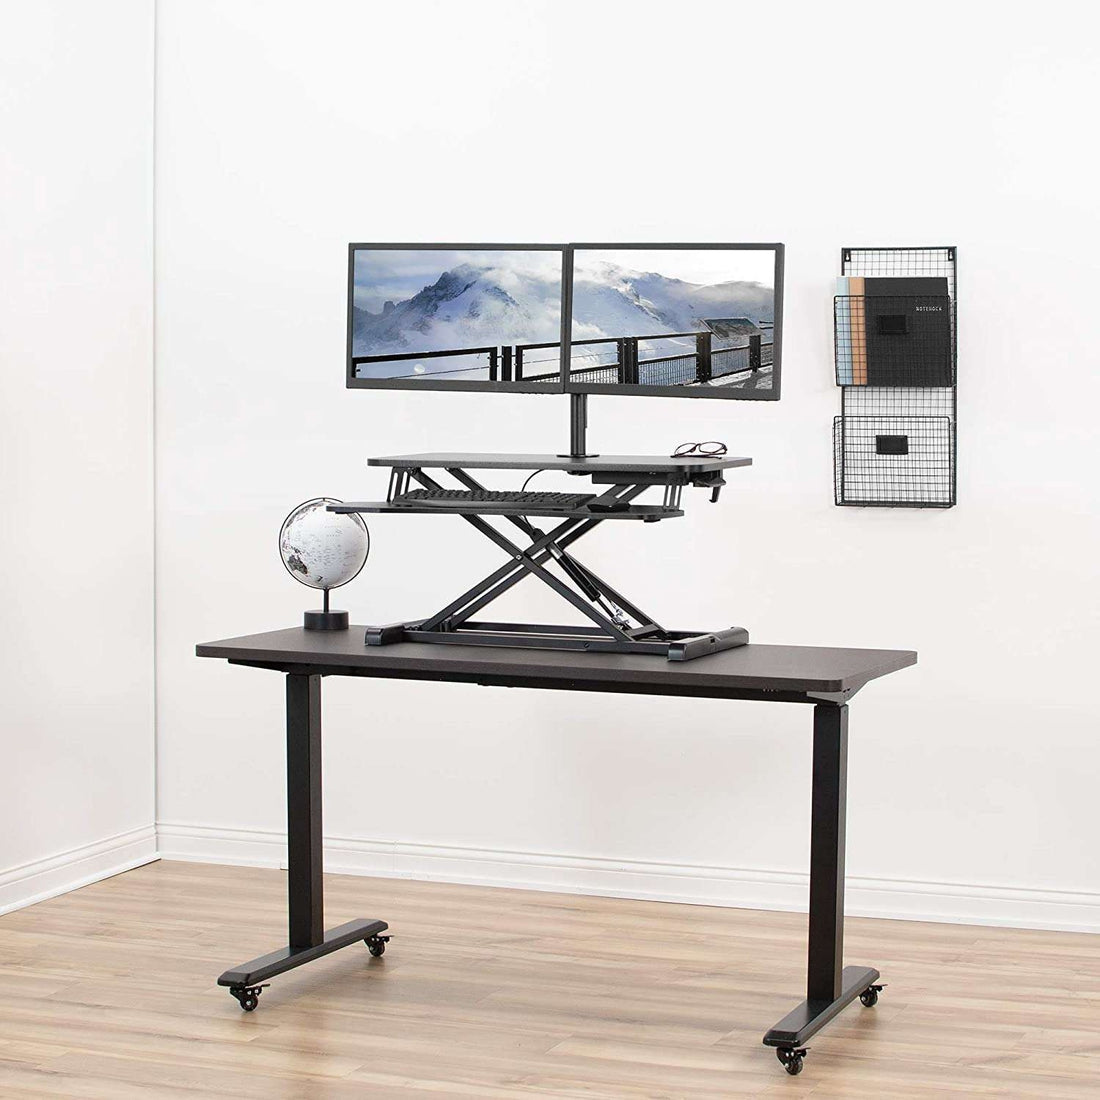 VIVO Full Motion Monitor + Laptop Desk Mount VESA Stand Fits 13 to 32  Screen